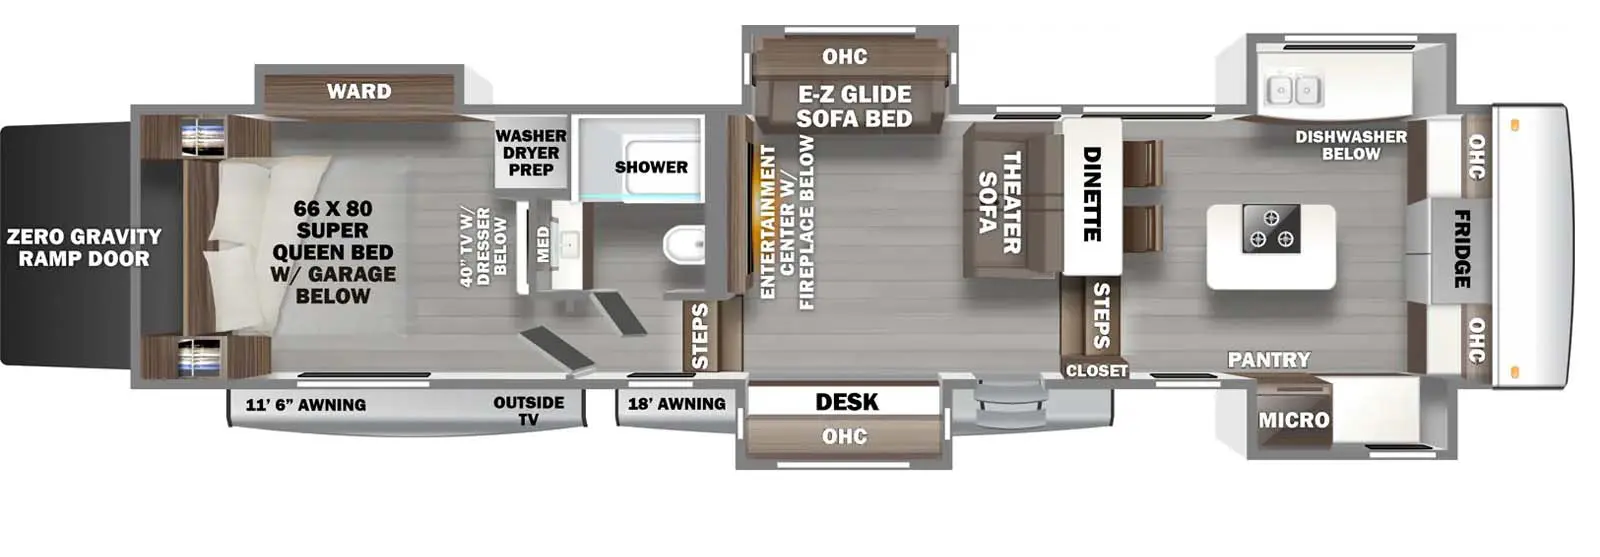 42FSKG Floorplan Image